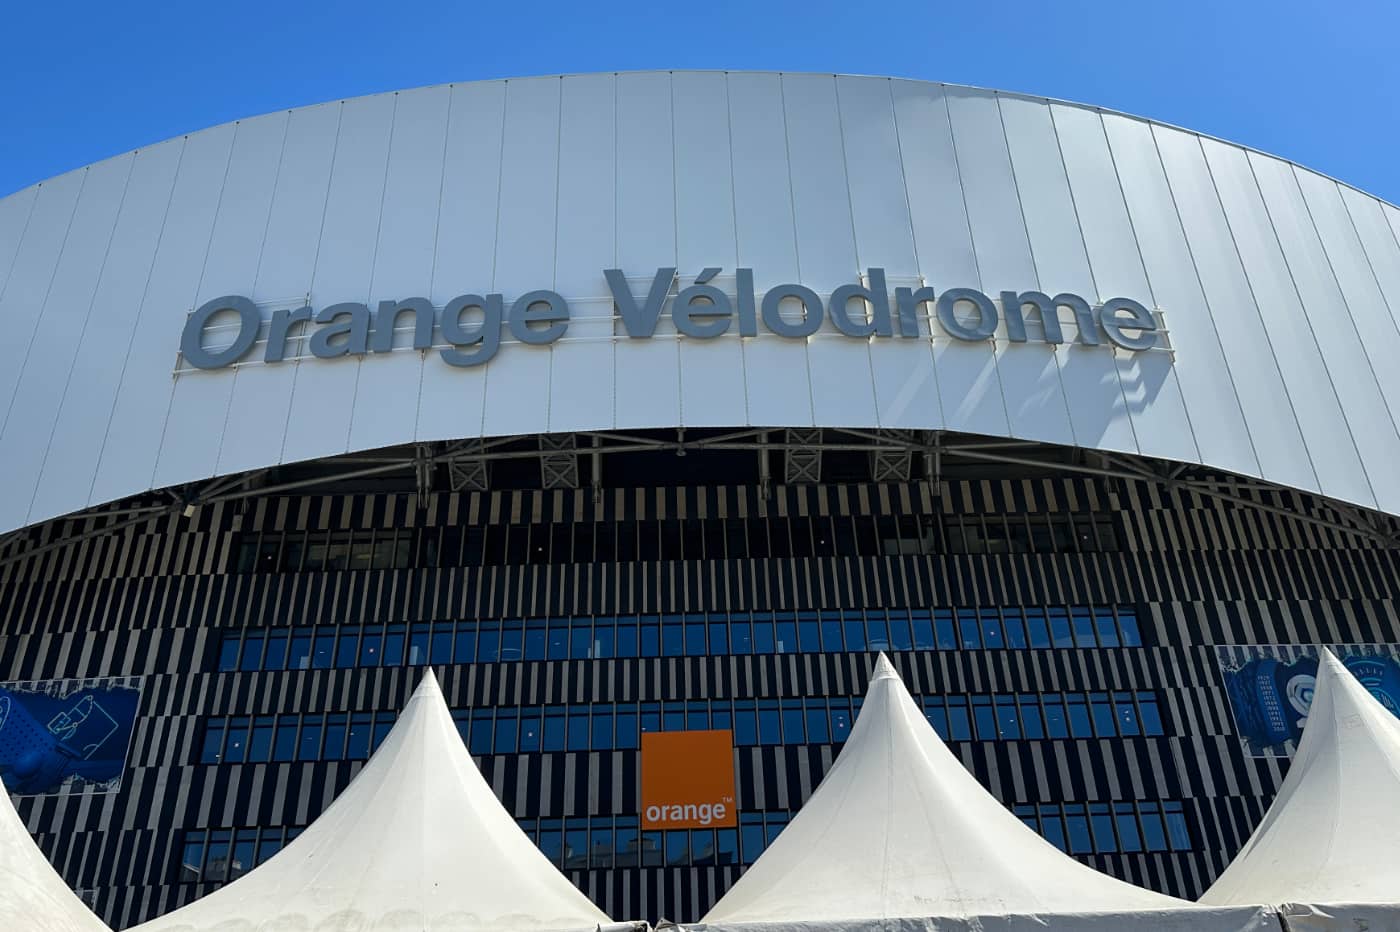 Le Stade Vélodrome, devenu Orange Vélodrome depuis 2016.